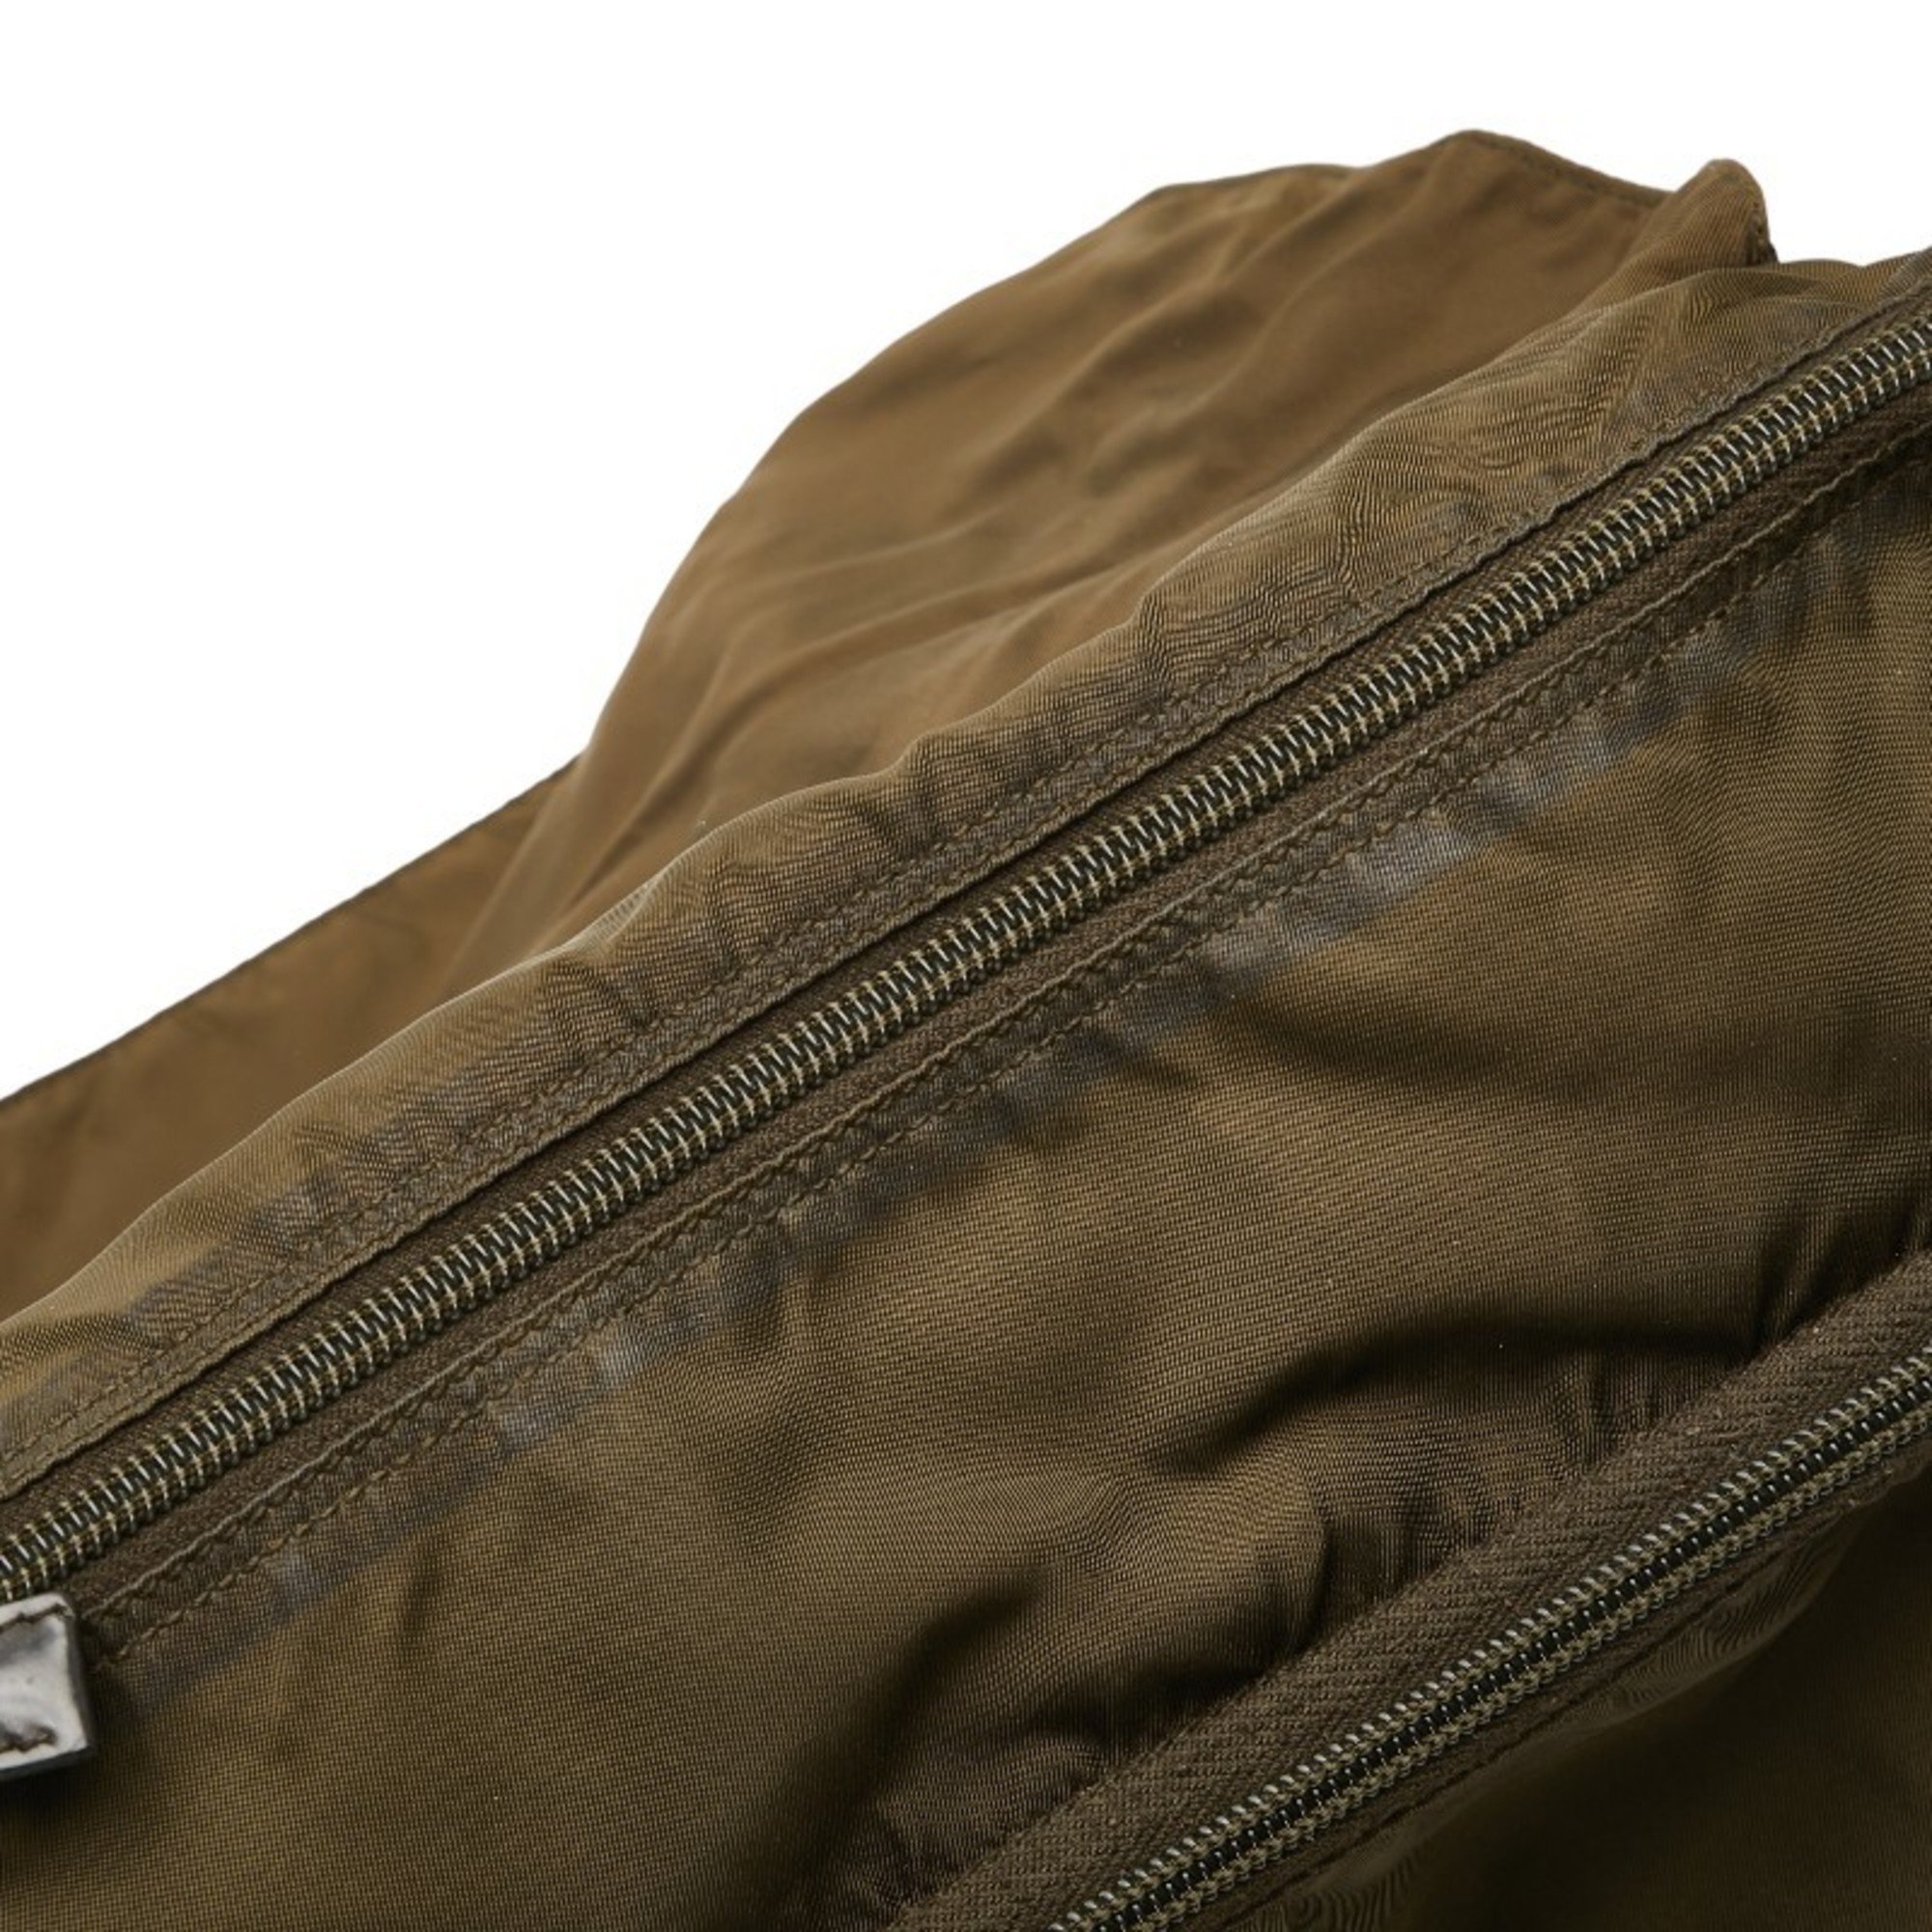 Prada Shoulder Bag B6671 Khaki Nylon Leather Women's PRADA